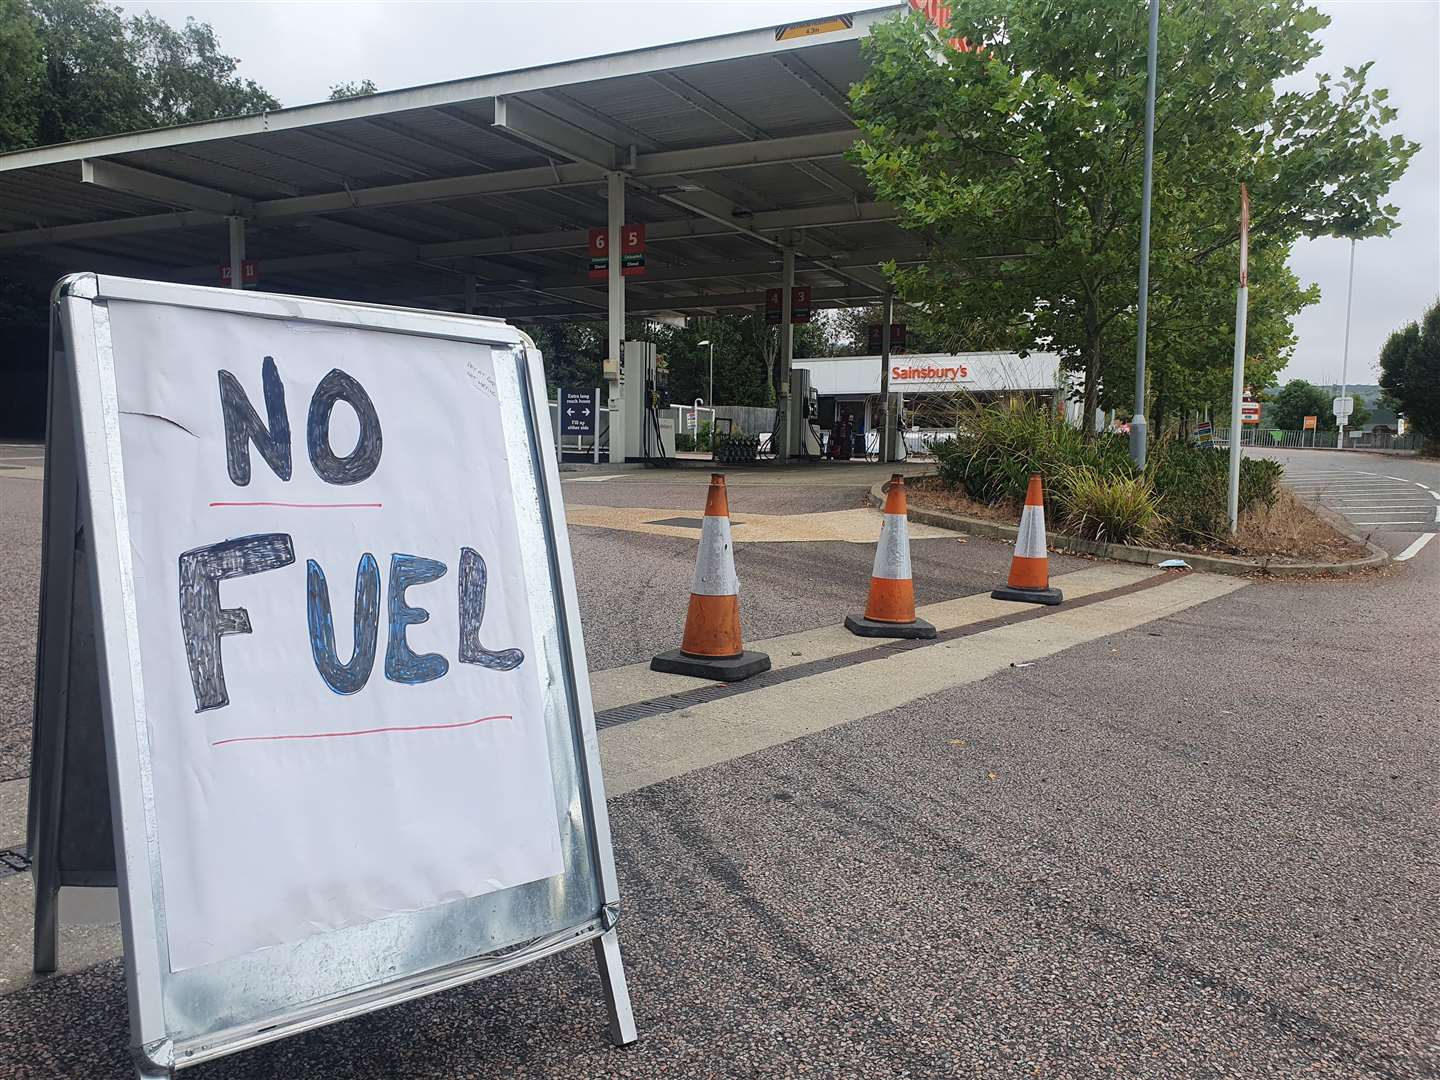 No Fuel: Sainsbury's in the Park Farm Industrial Estate